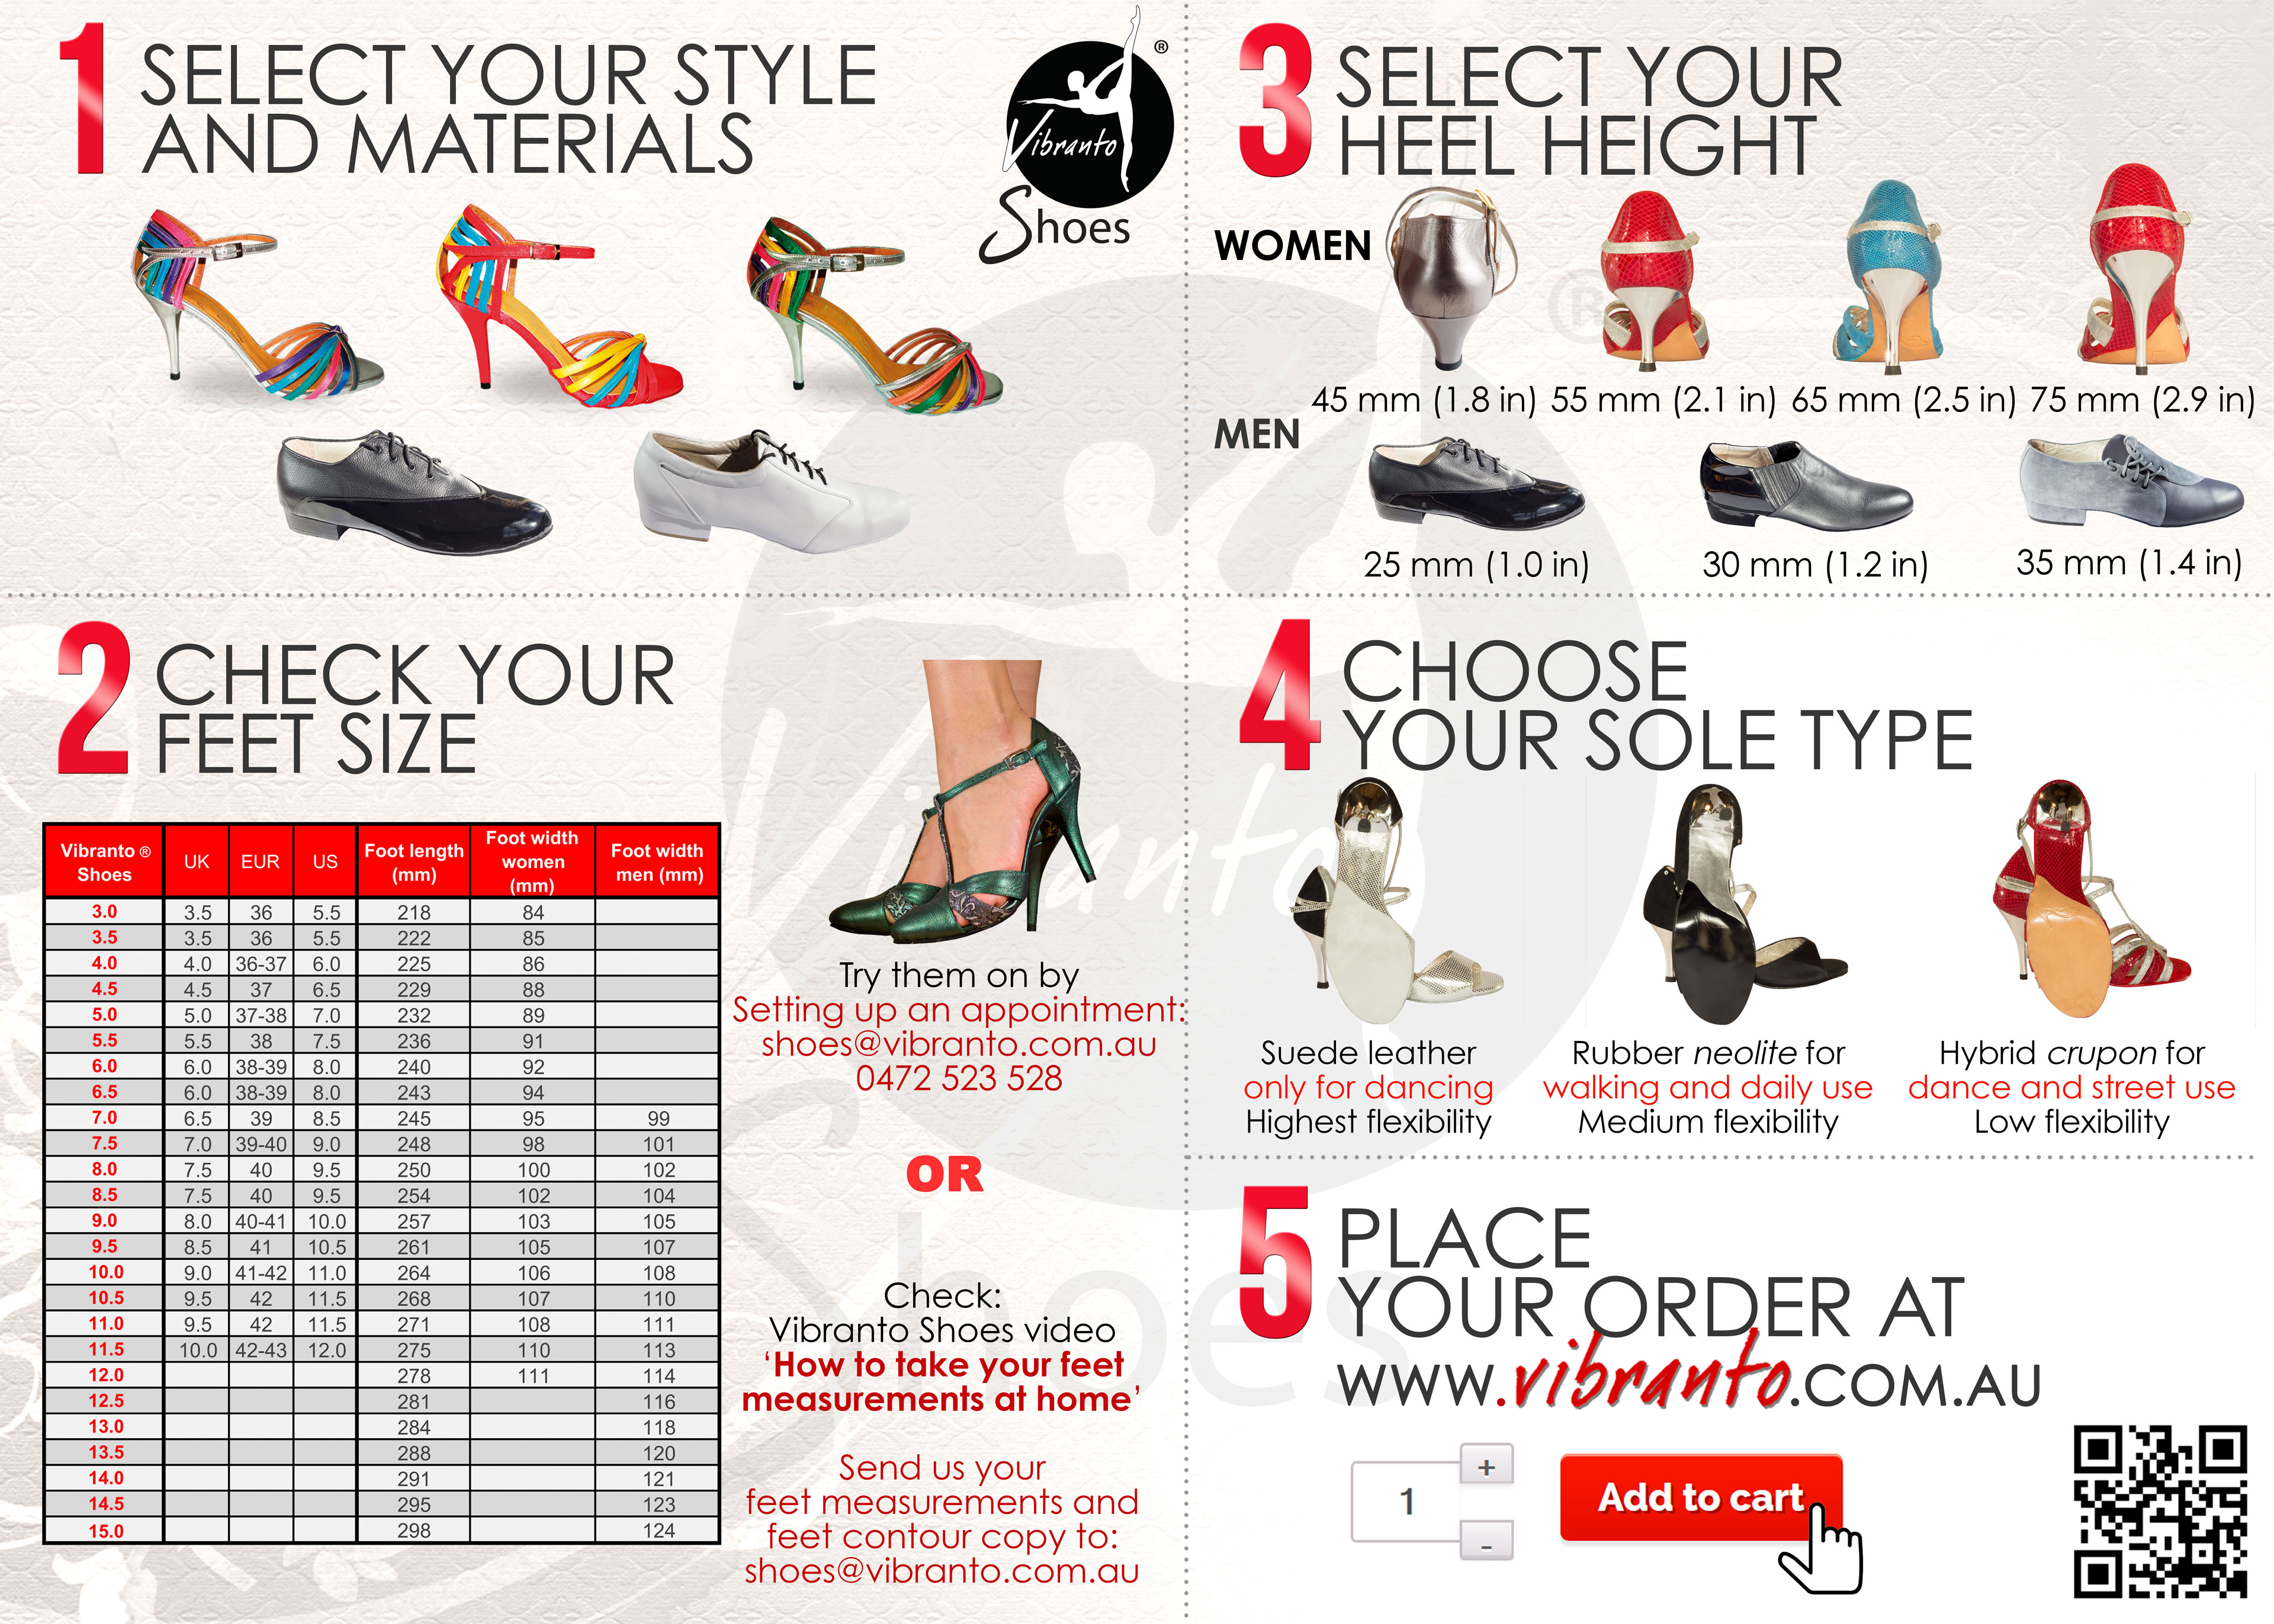 Vibranto Shoes online purchasing process